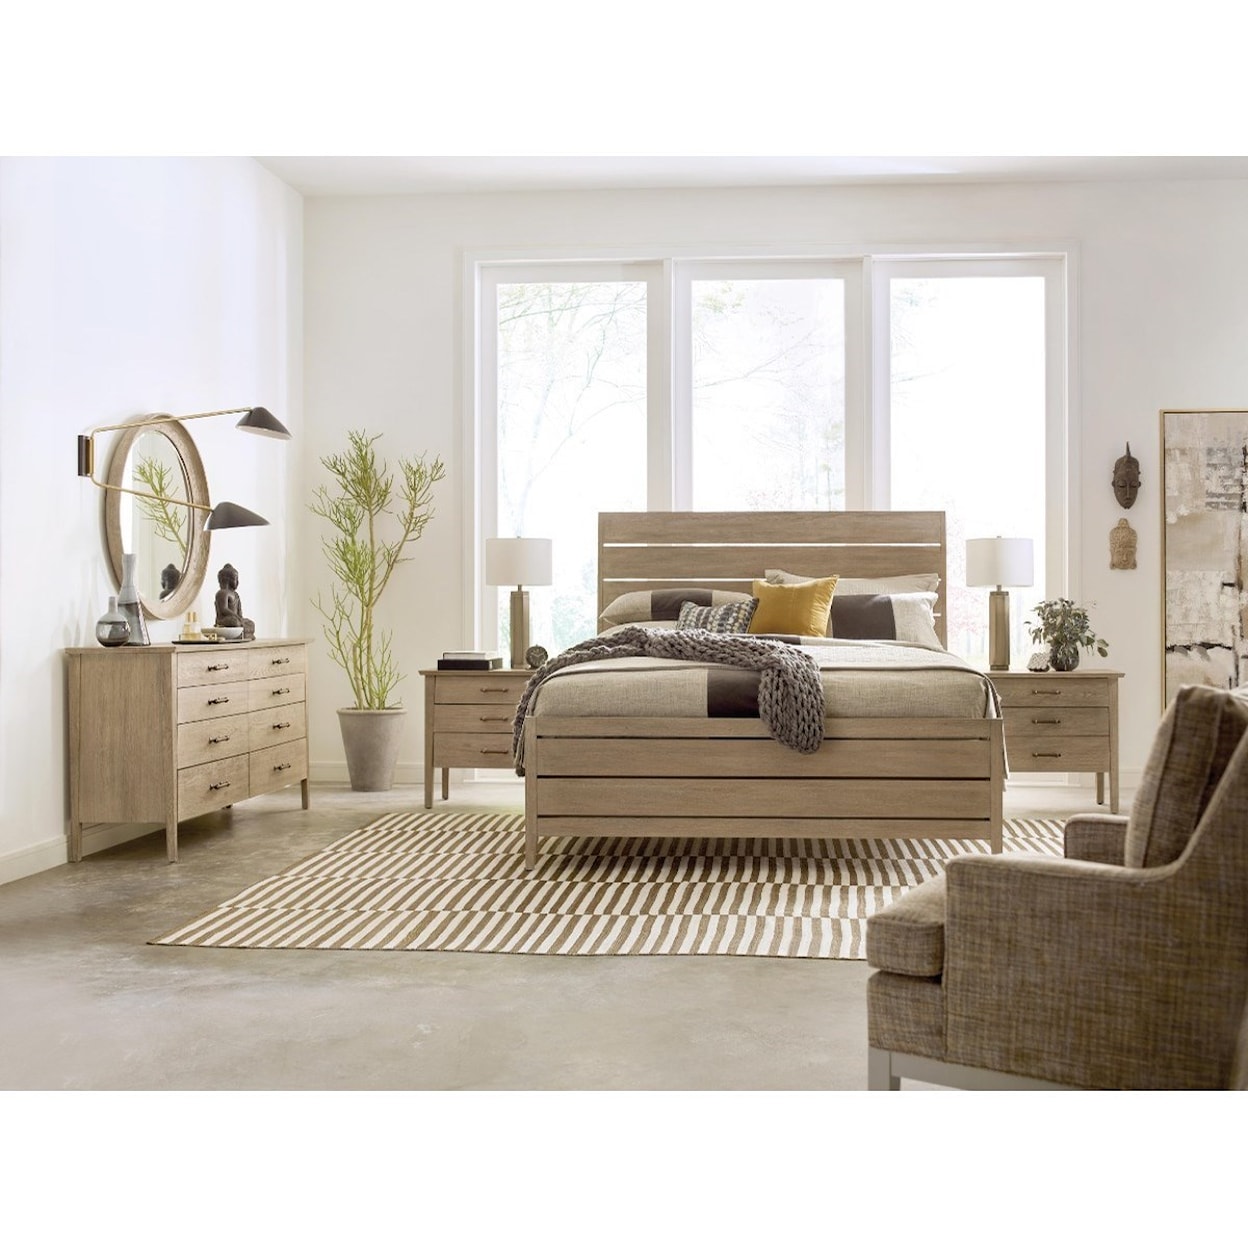 Kincaid Furniture Symmetry California King Bedroom Group